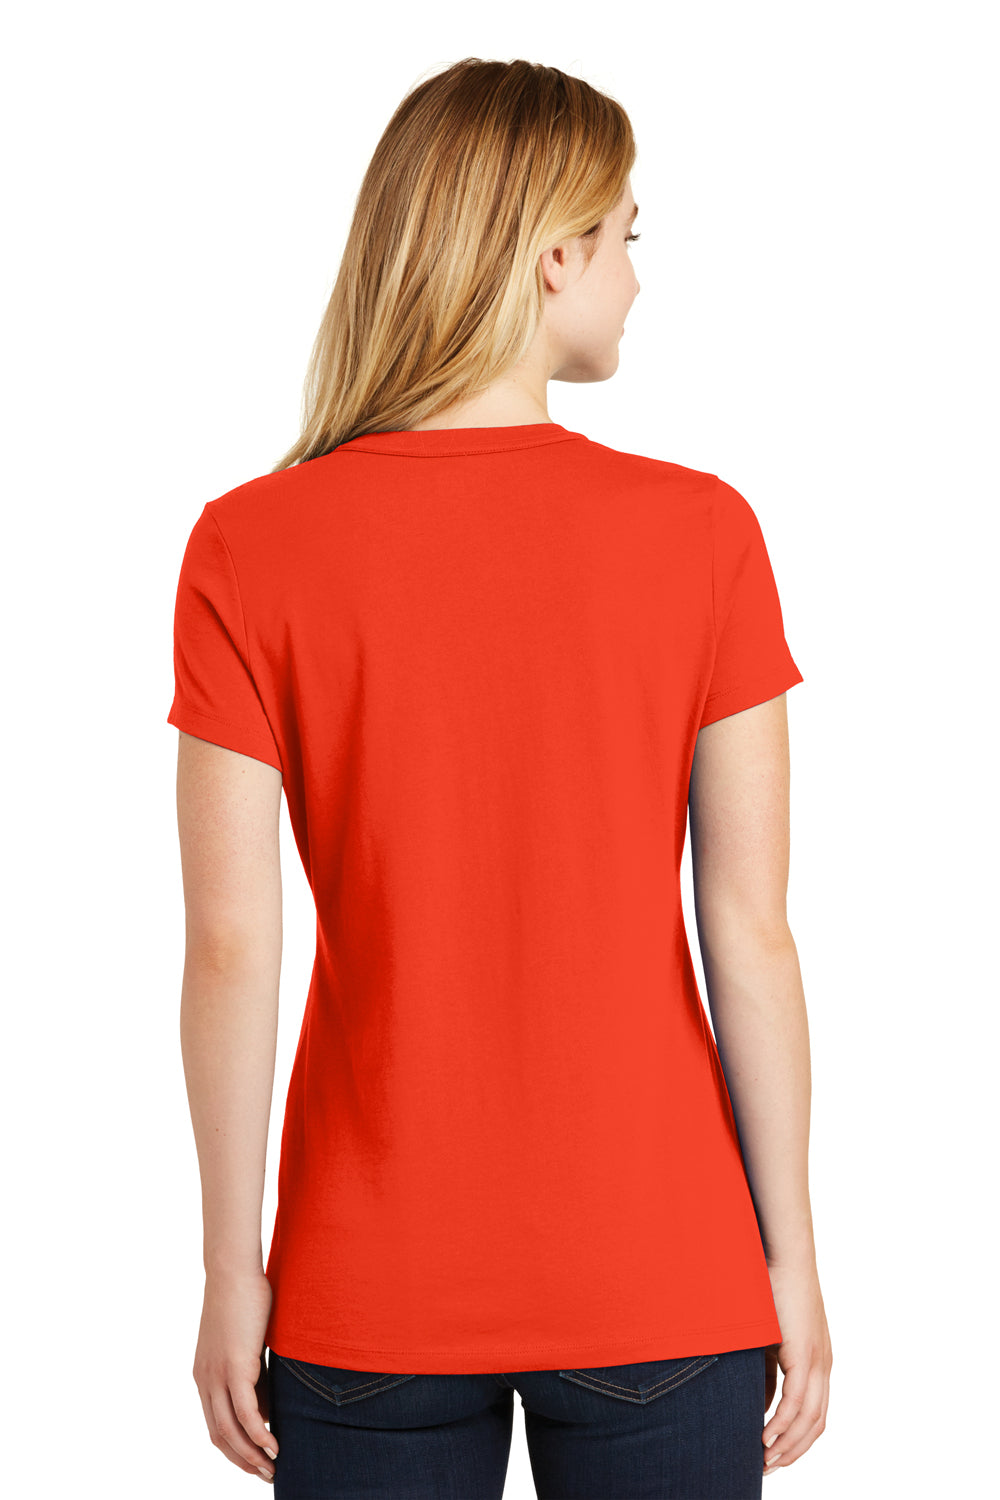 New Era LNEA100 Womens Heritage Short Sleeve Crewneck T-Shirt Orange Back